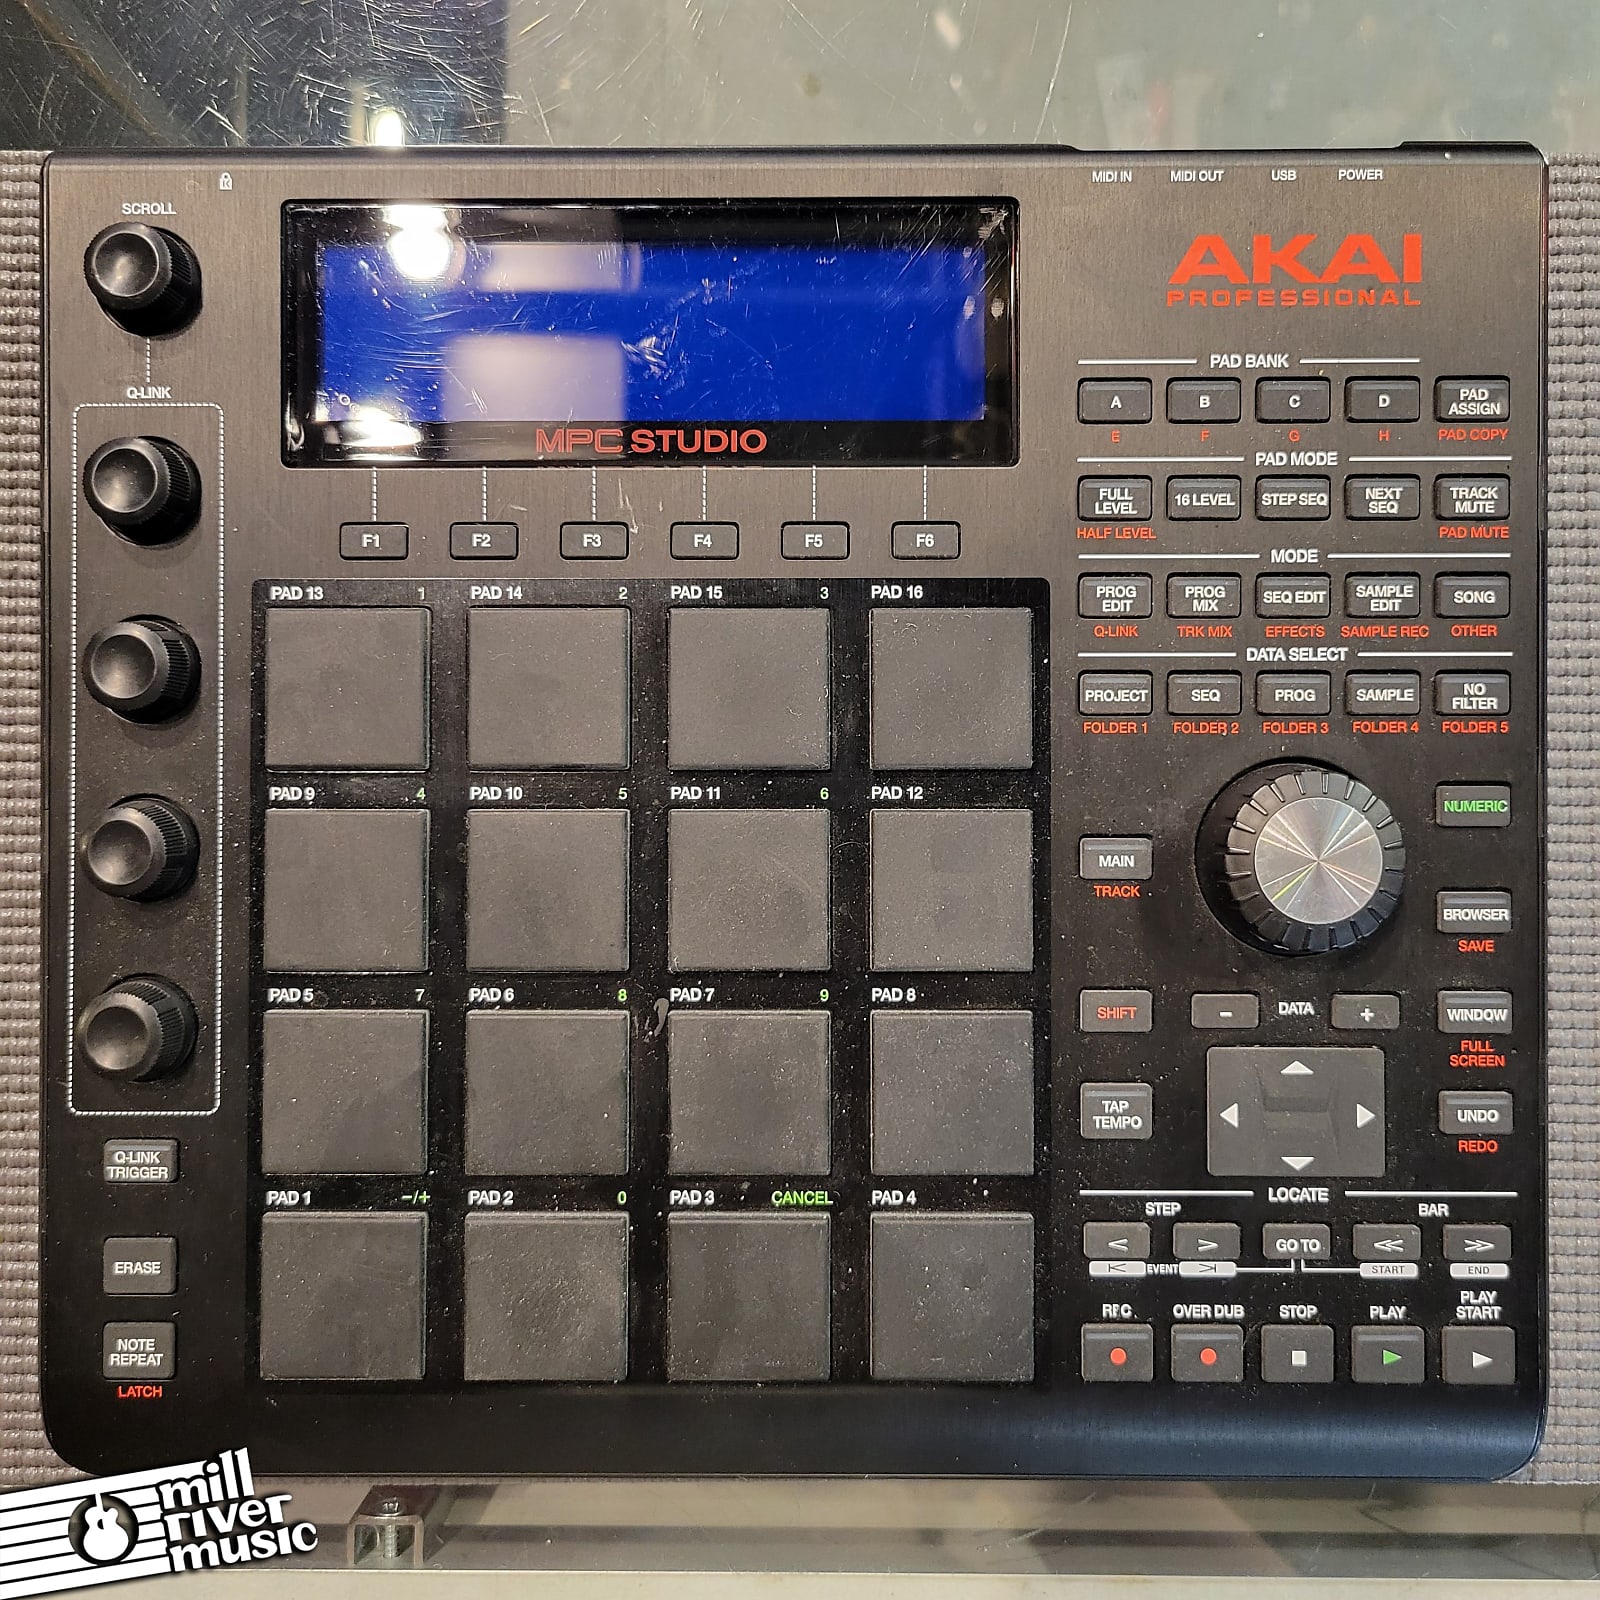 Akai Professional MPC Studio Production MIDI Controller Used